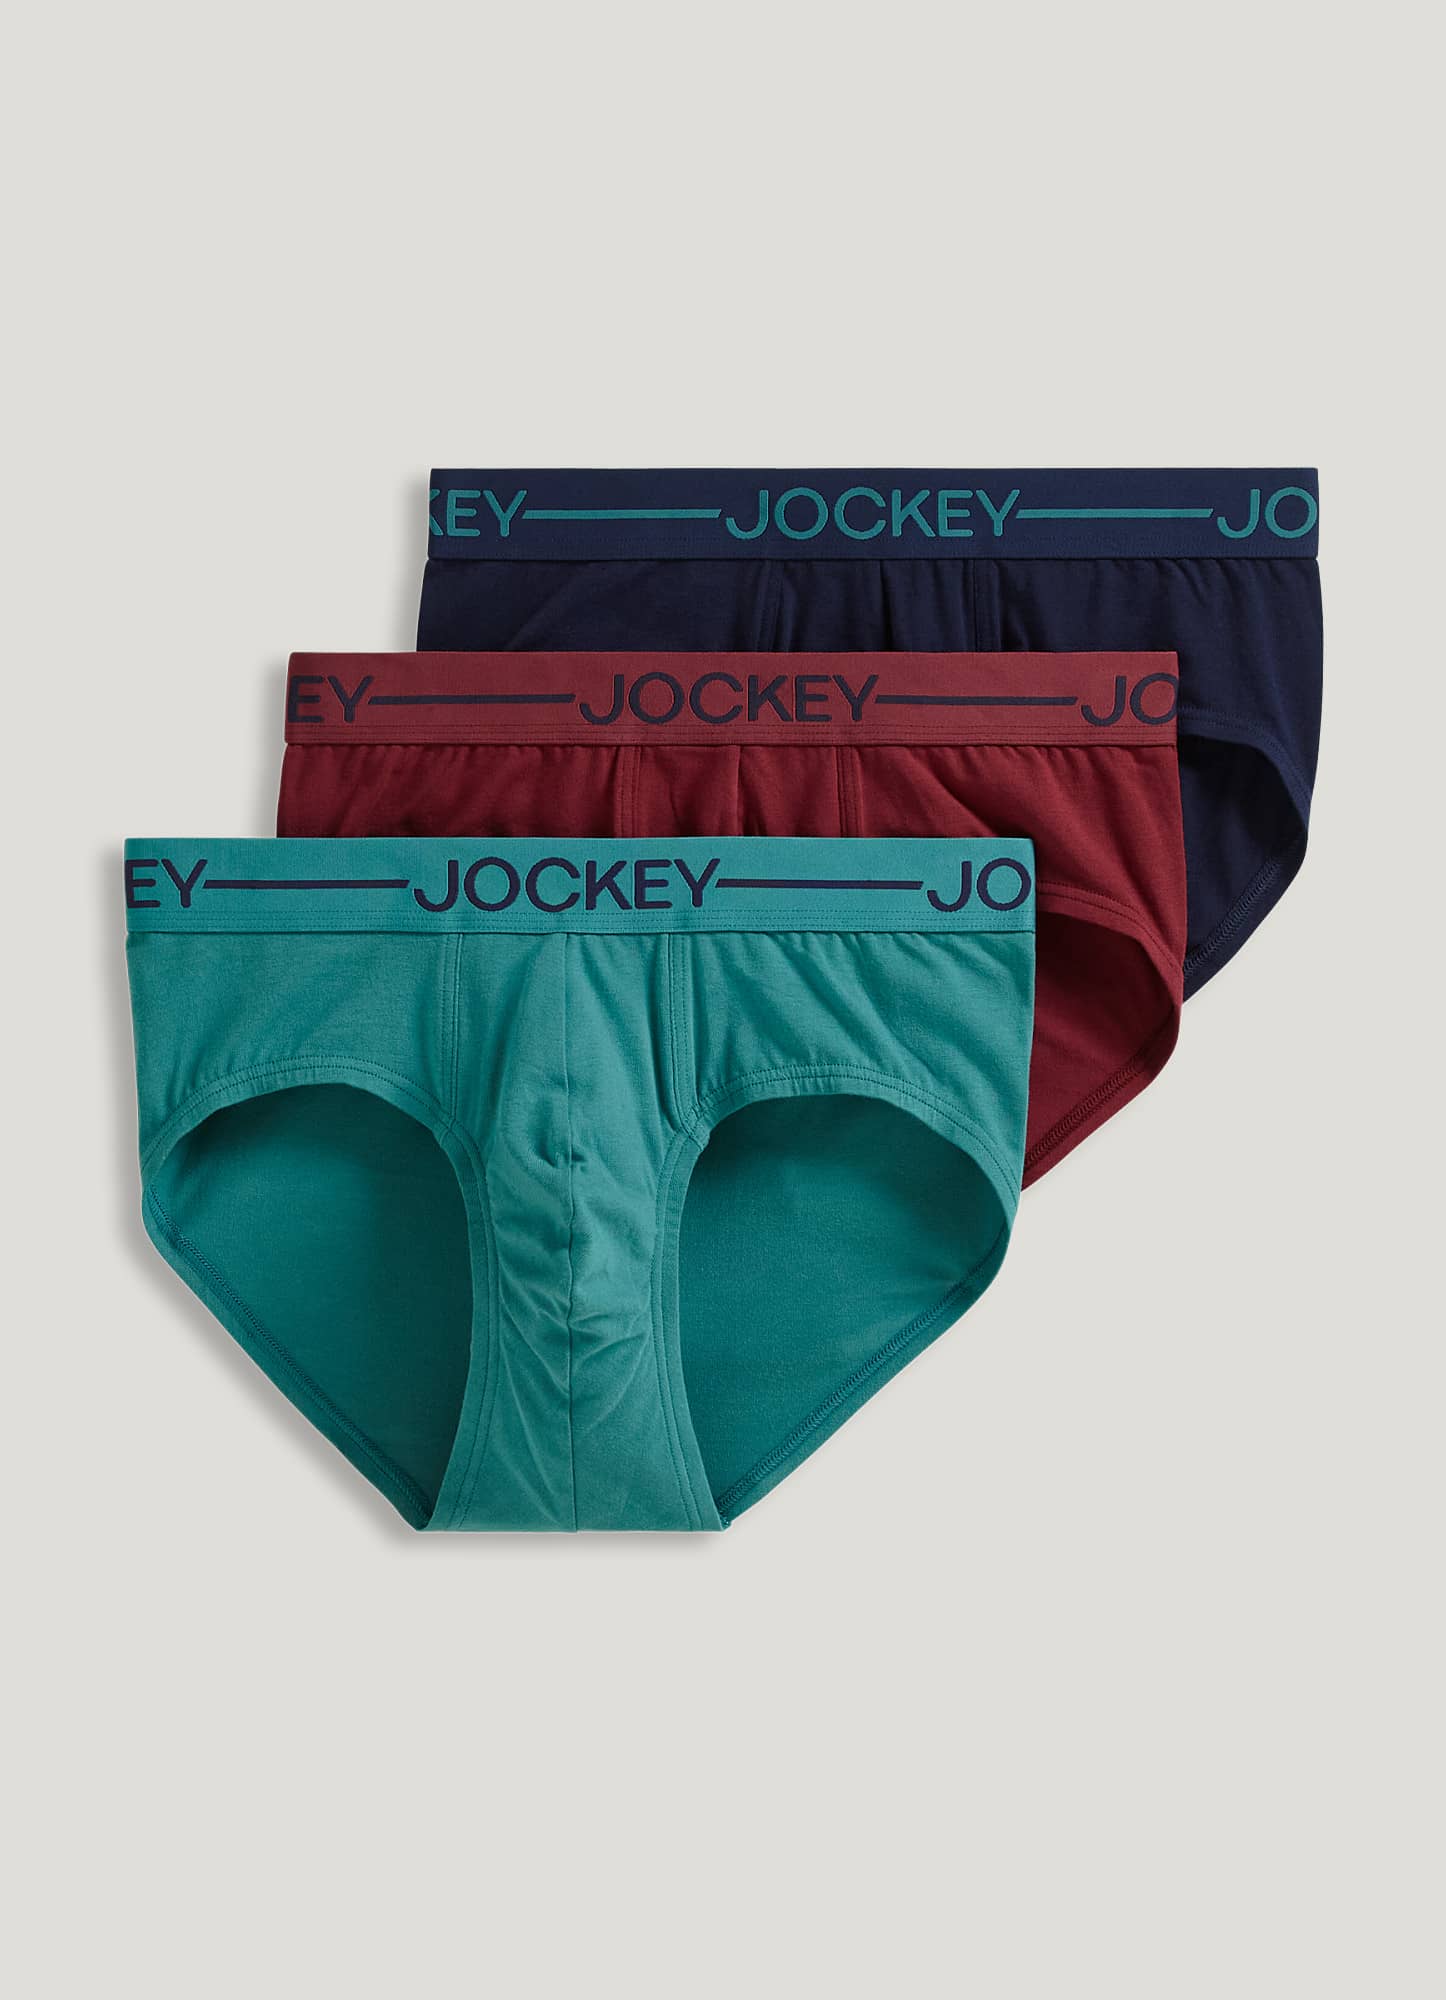 Jockey Men's Underwear Casual Cotton Stretch Brief - 3 Pack, Cross Hatch  Dot/Fresh Pistachio/Taffy Camo, M